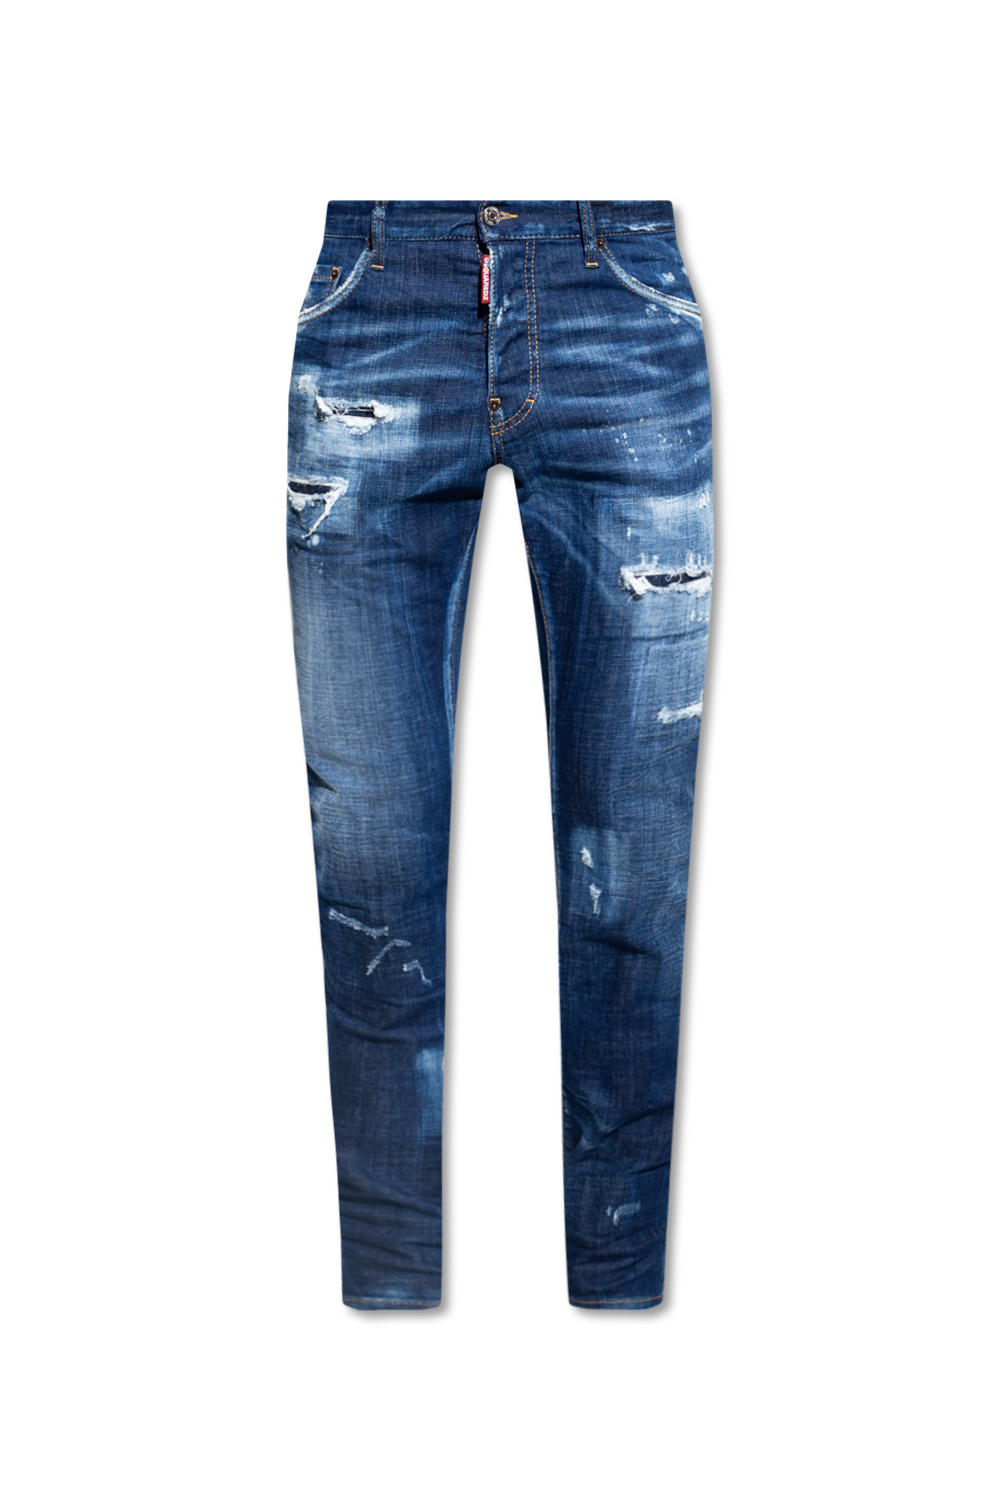 Dsquared2 ‘Cool Guy Jean’ jeans | Men's Clothing | Vitkac